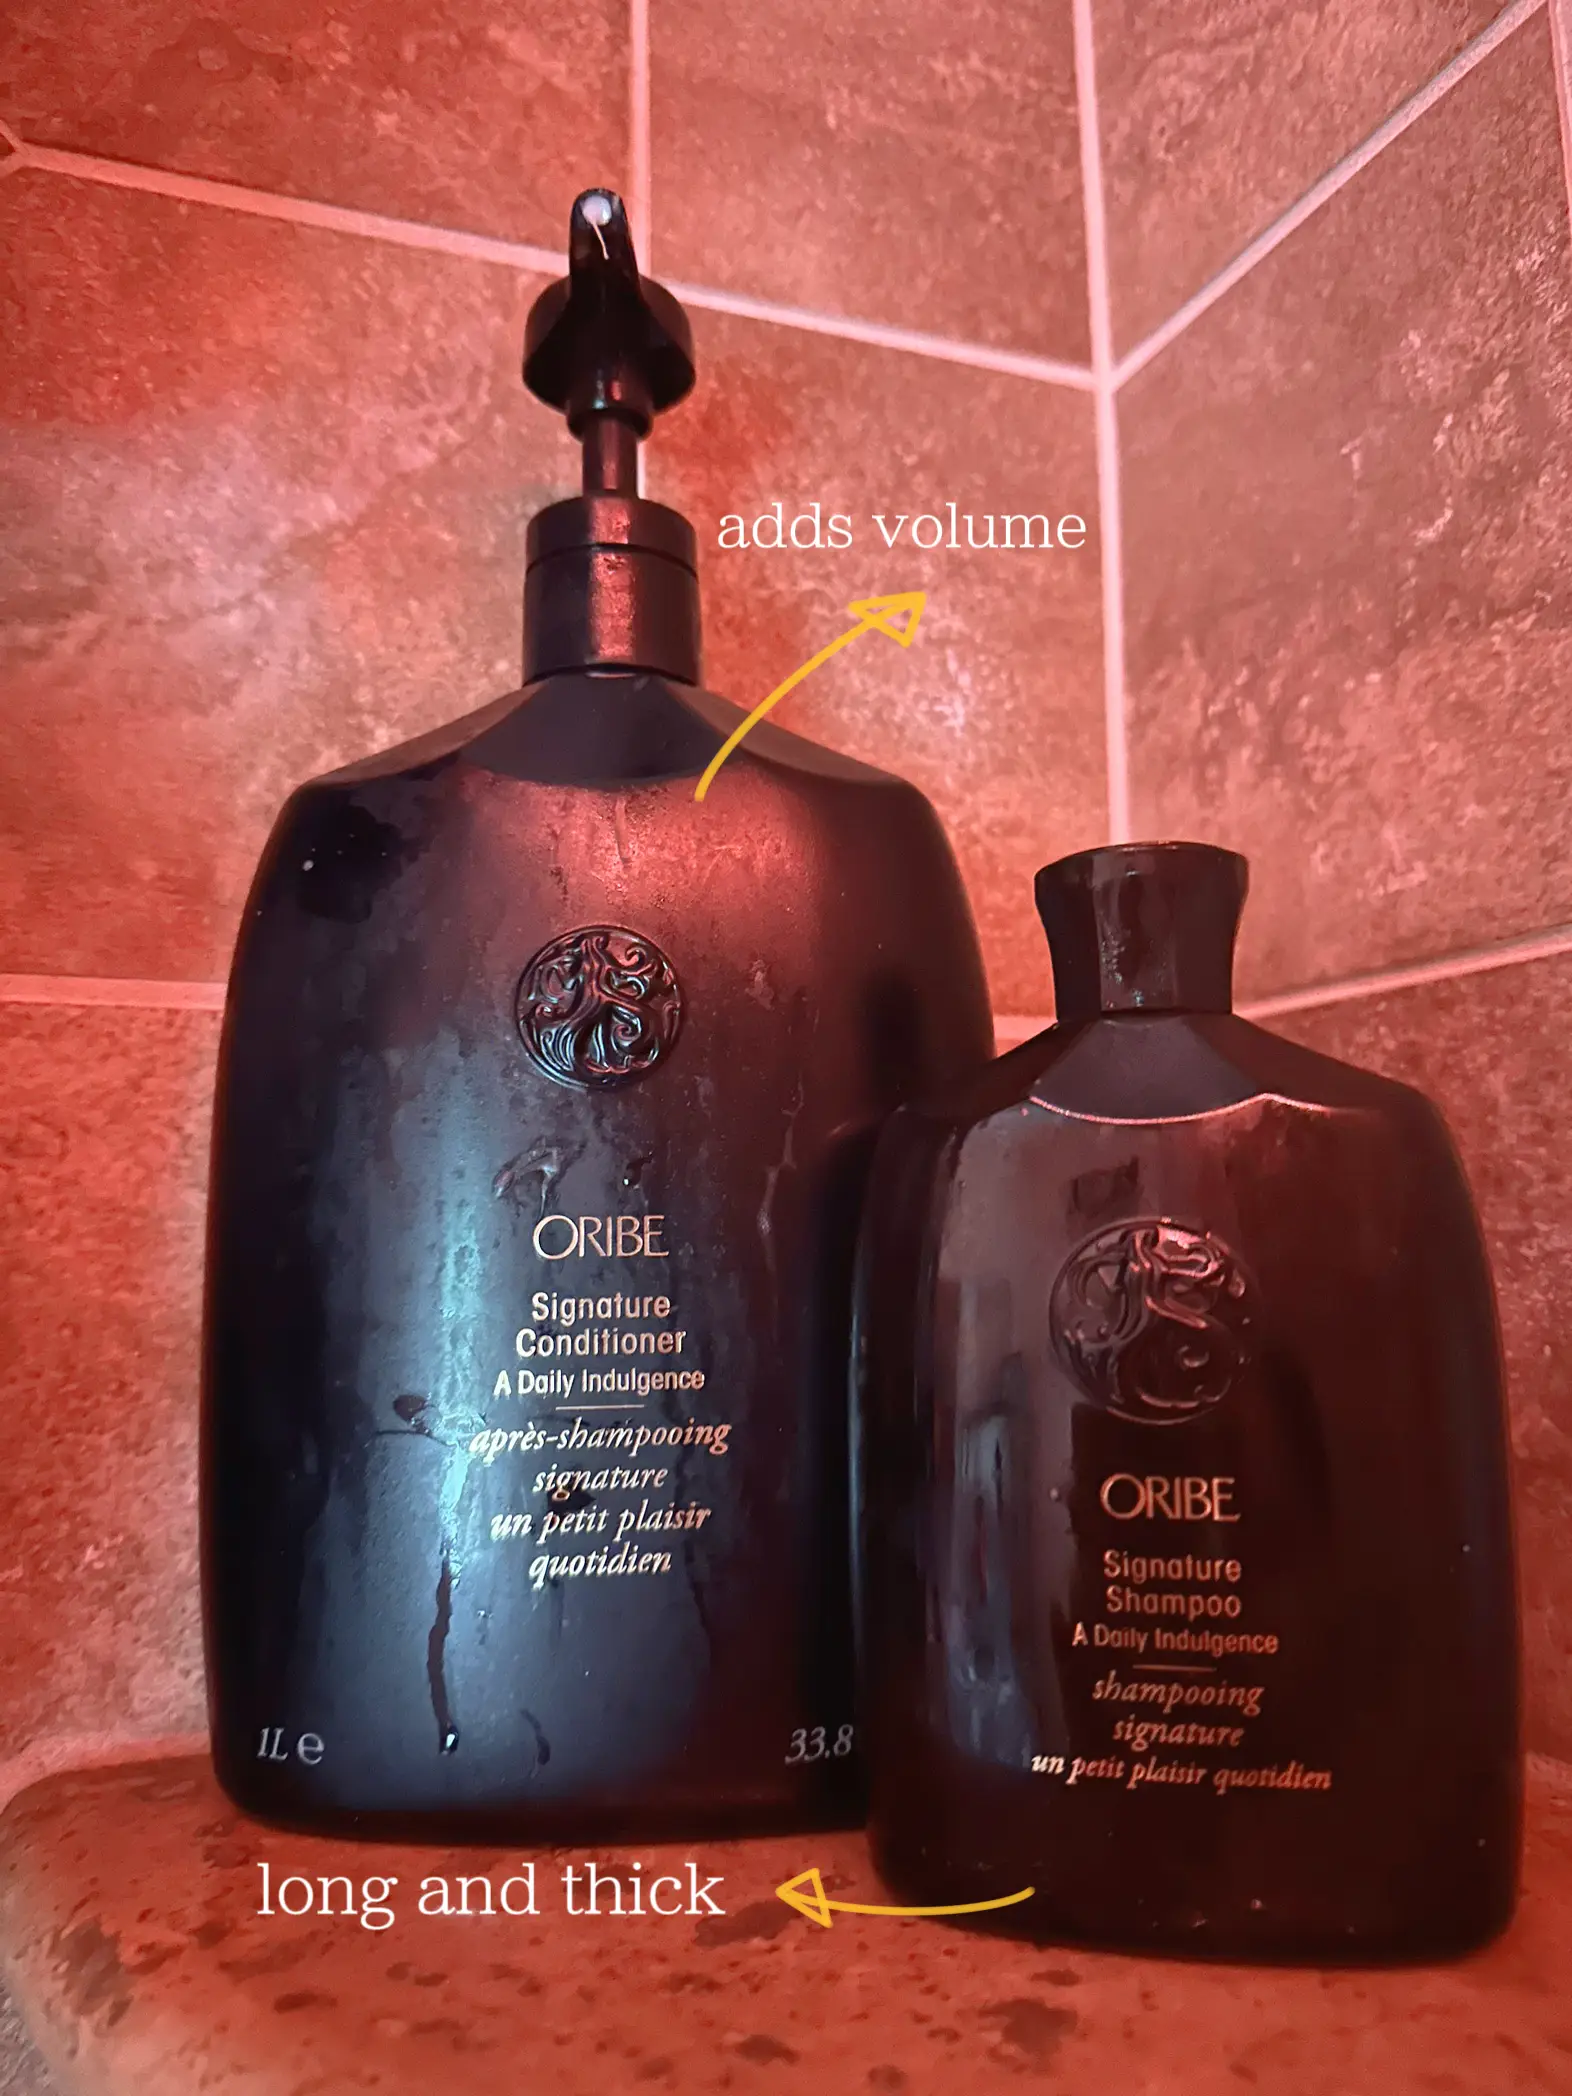  Two bottles of ORIBE hair care